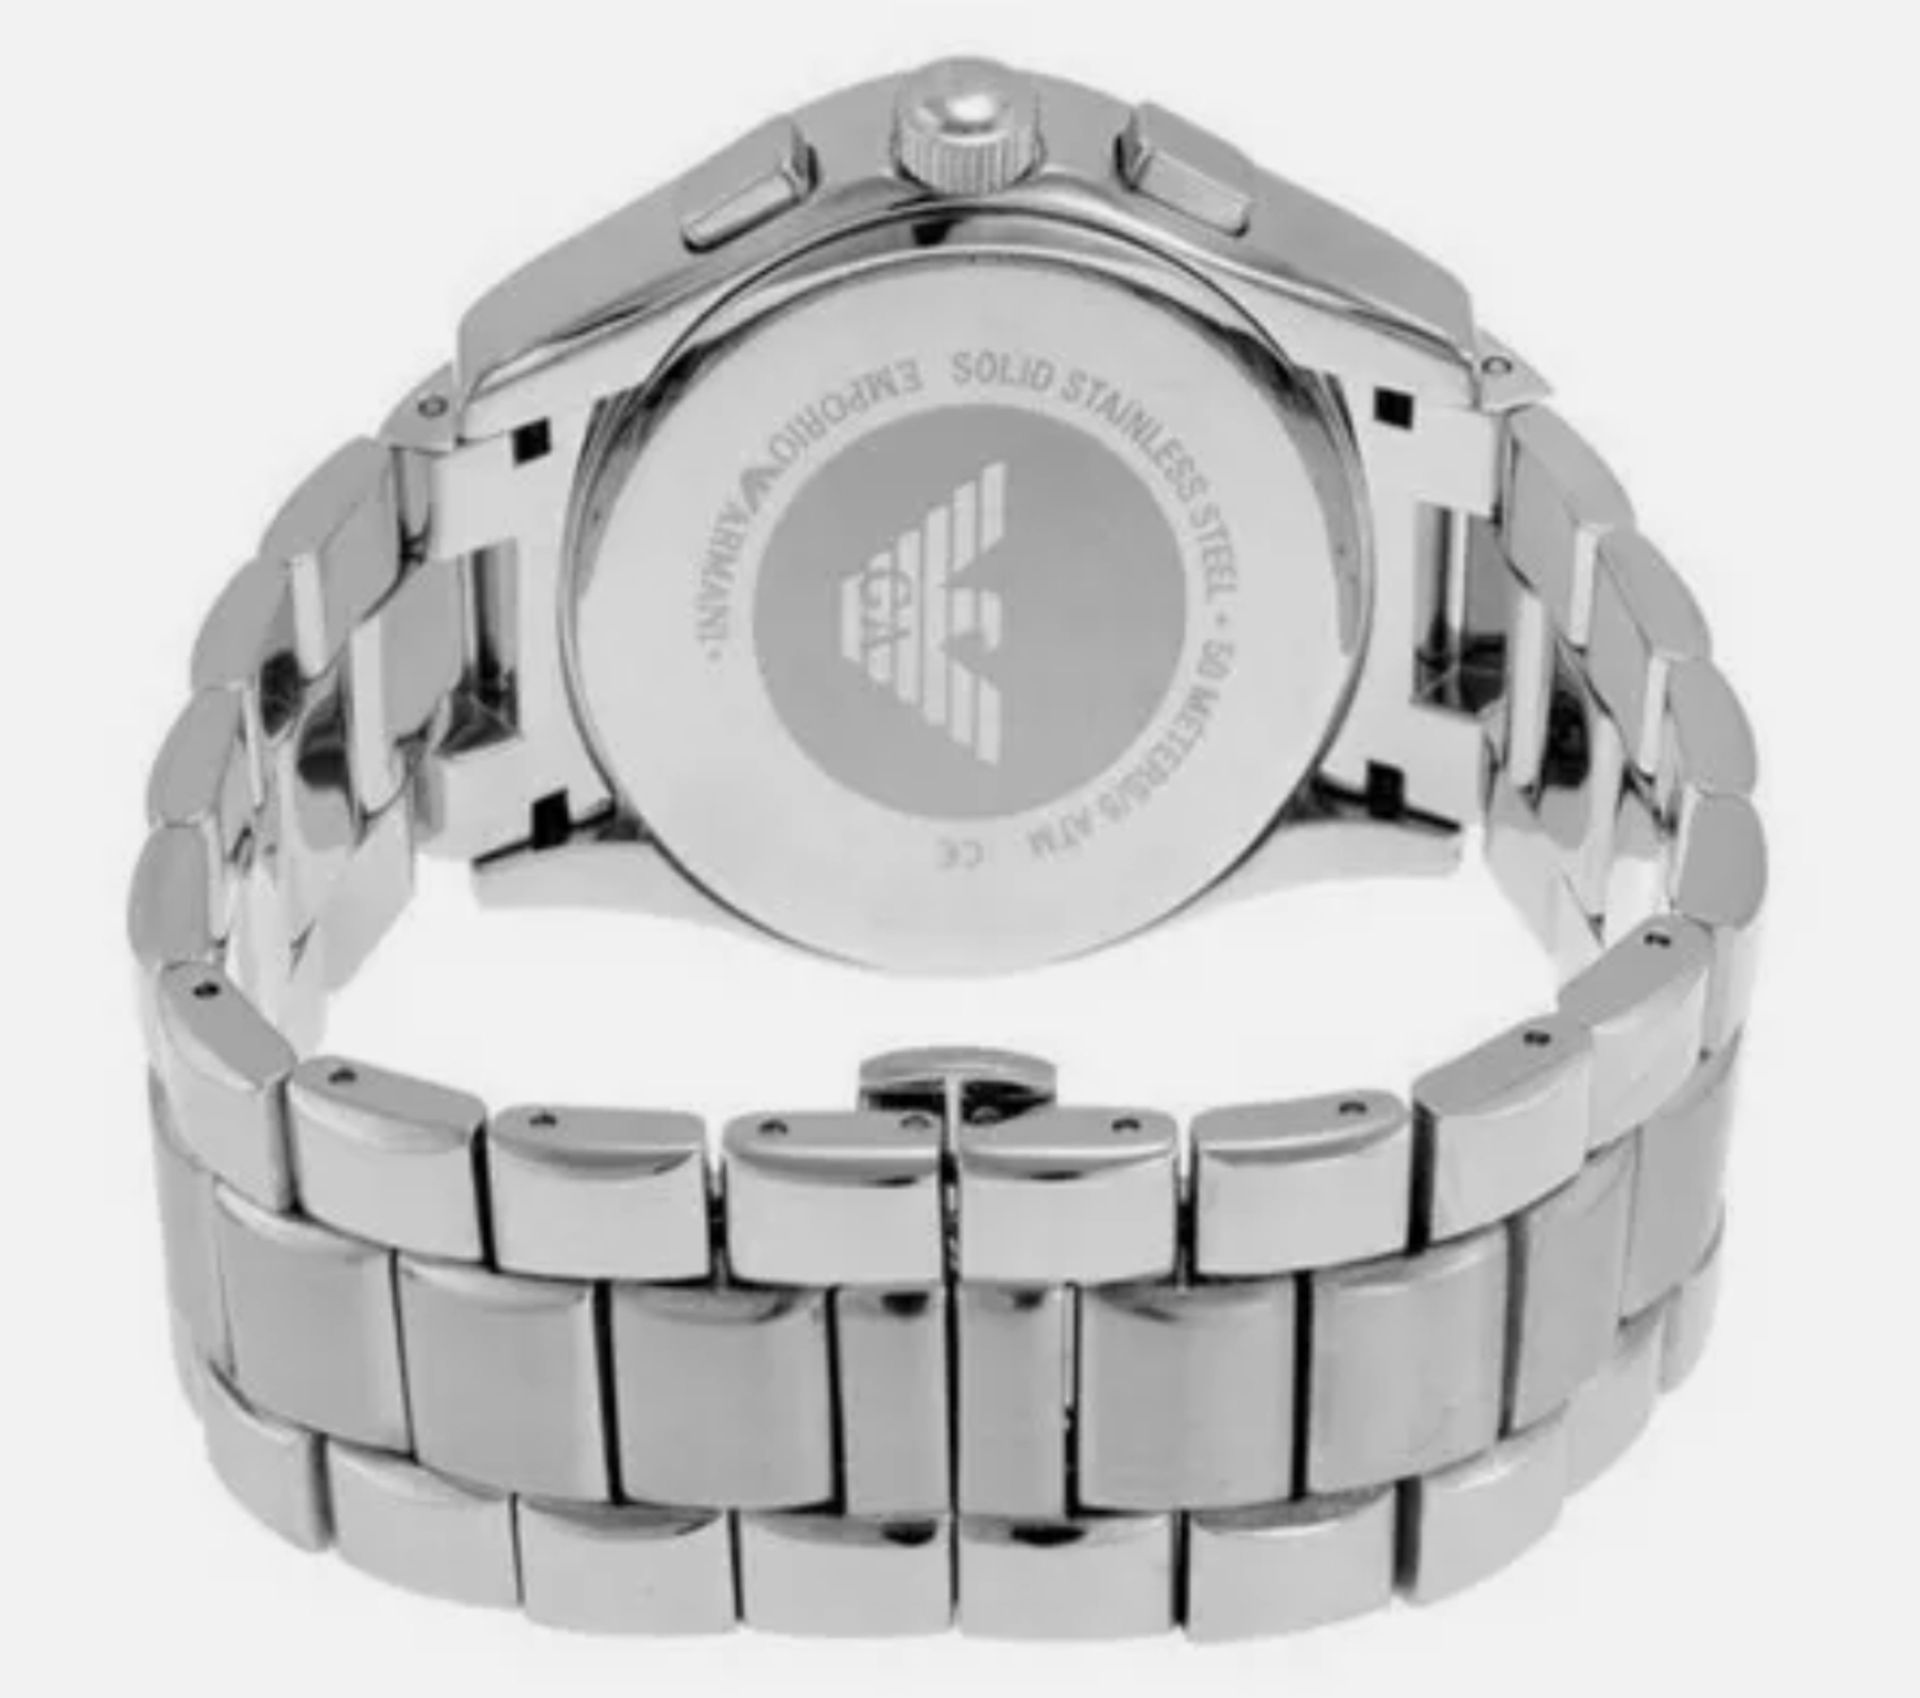 Emporio Armani AR5860 Quartz Men's Stainless Steel Chronograph Watch - Image 6 of 8